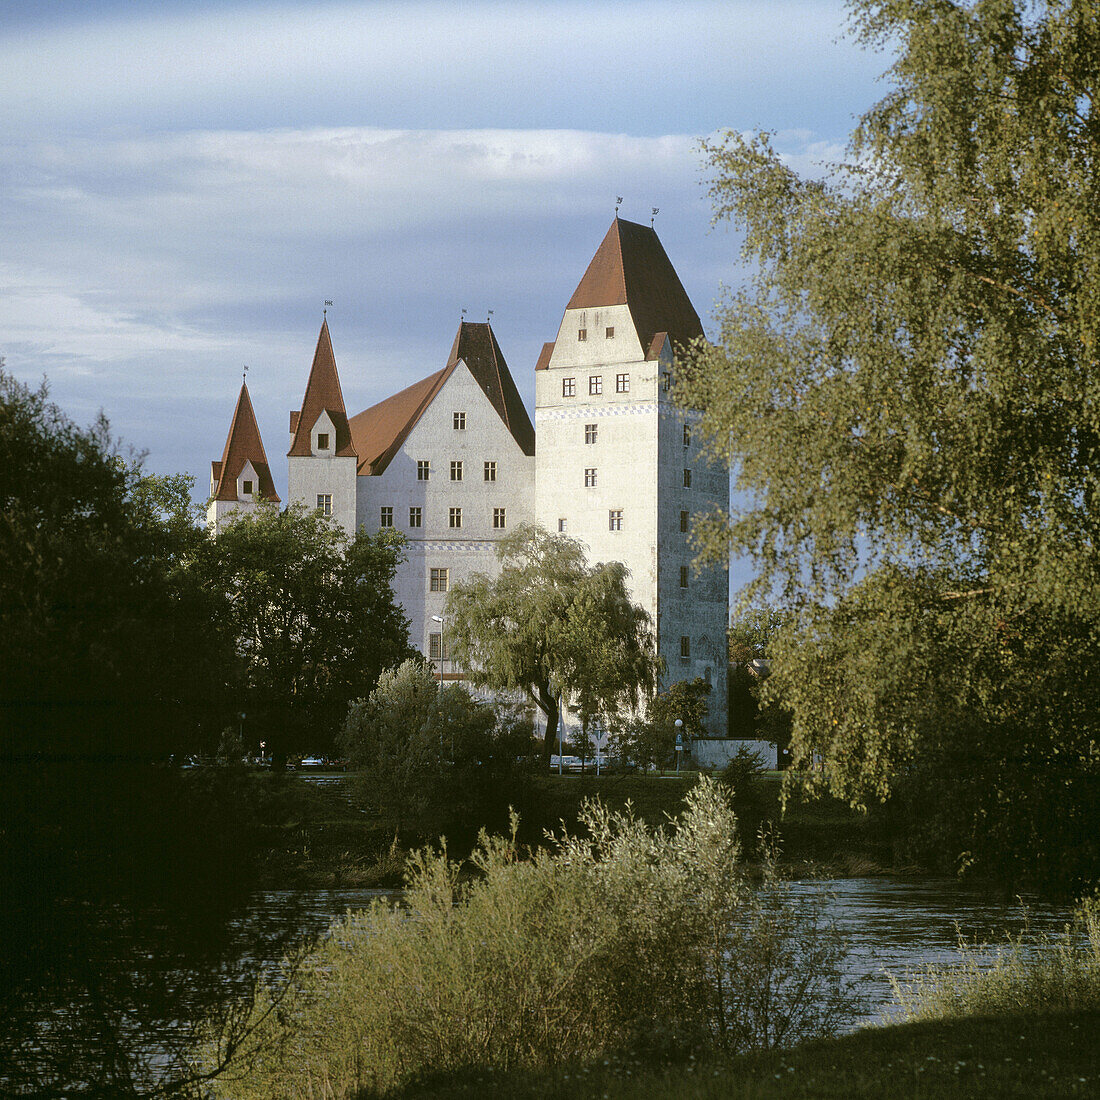 Neues Schloss (New Castle), Ingolstadt, Bavaria, Germany